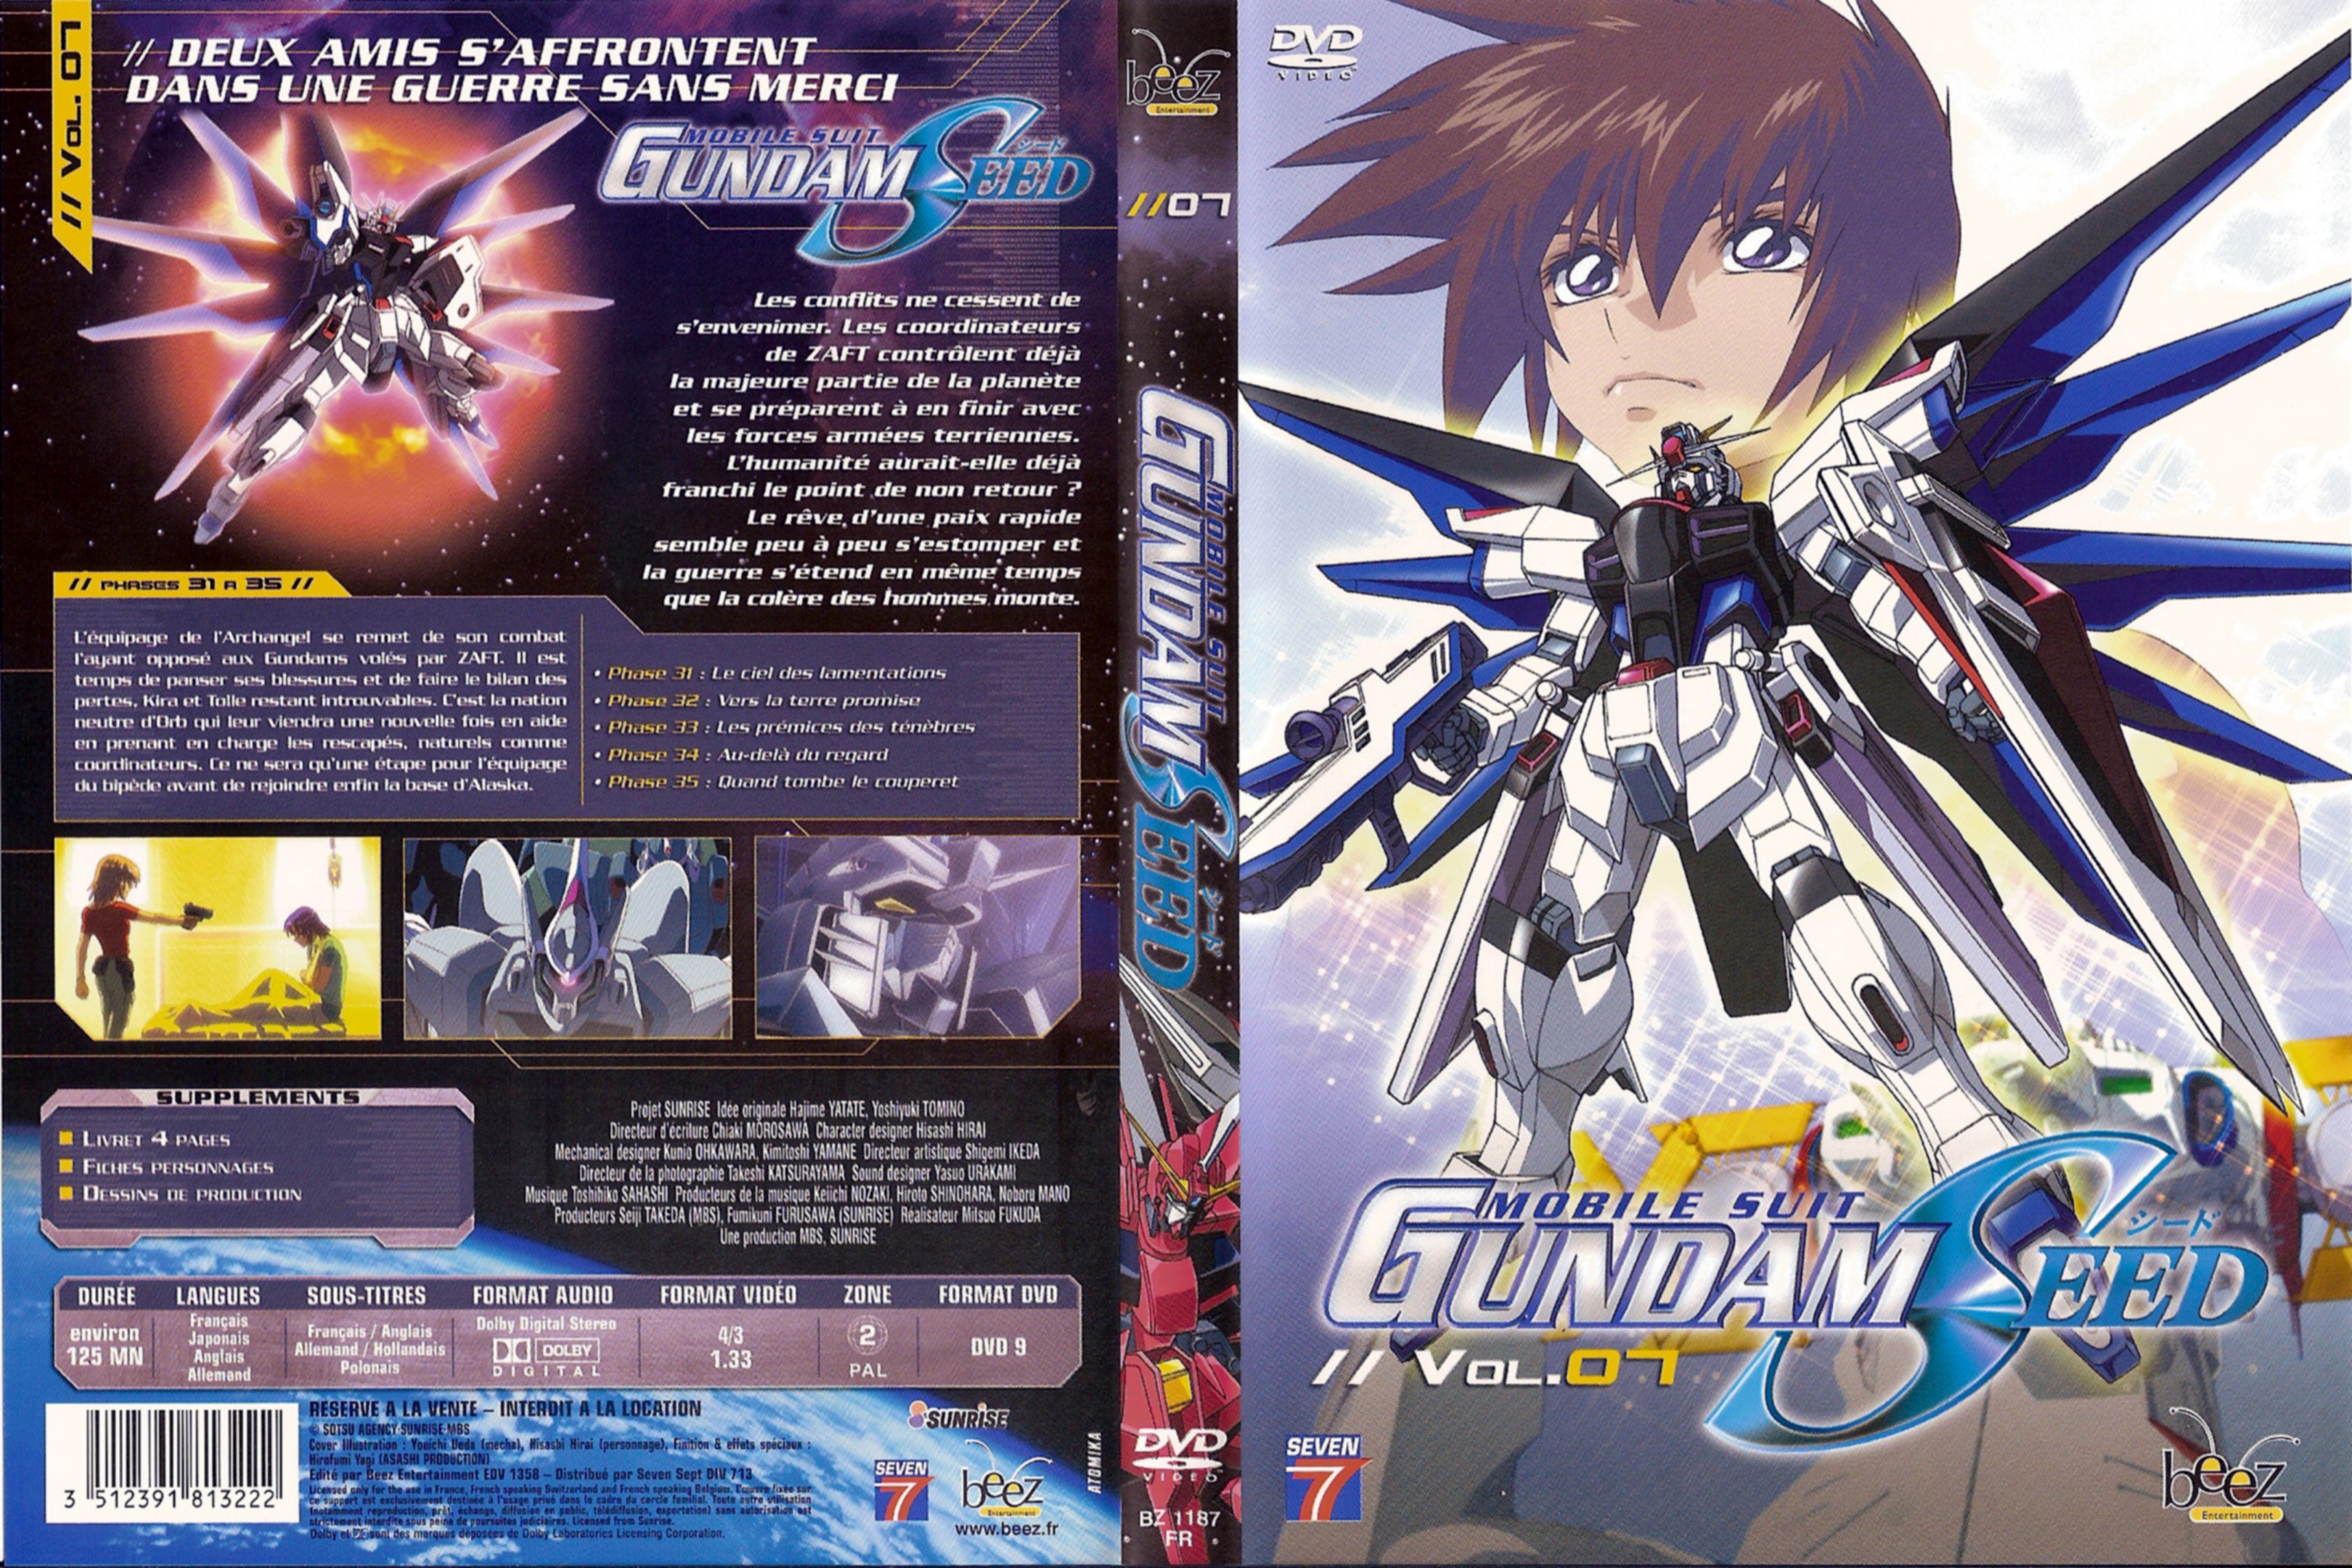 Jaquette DVD Gundam seed vol 07